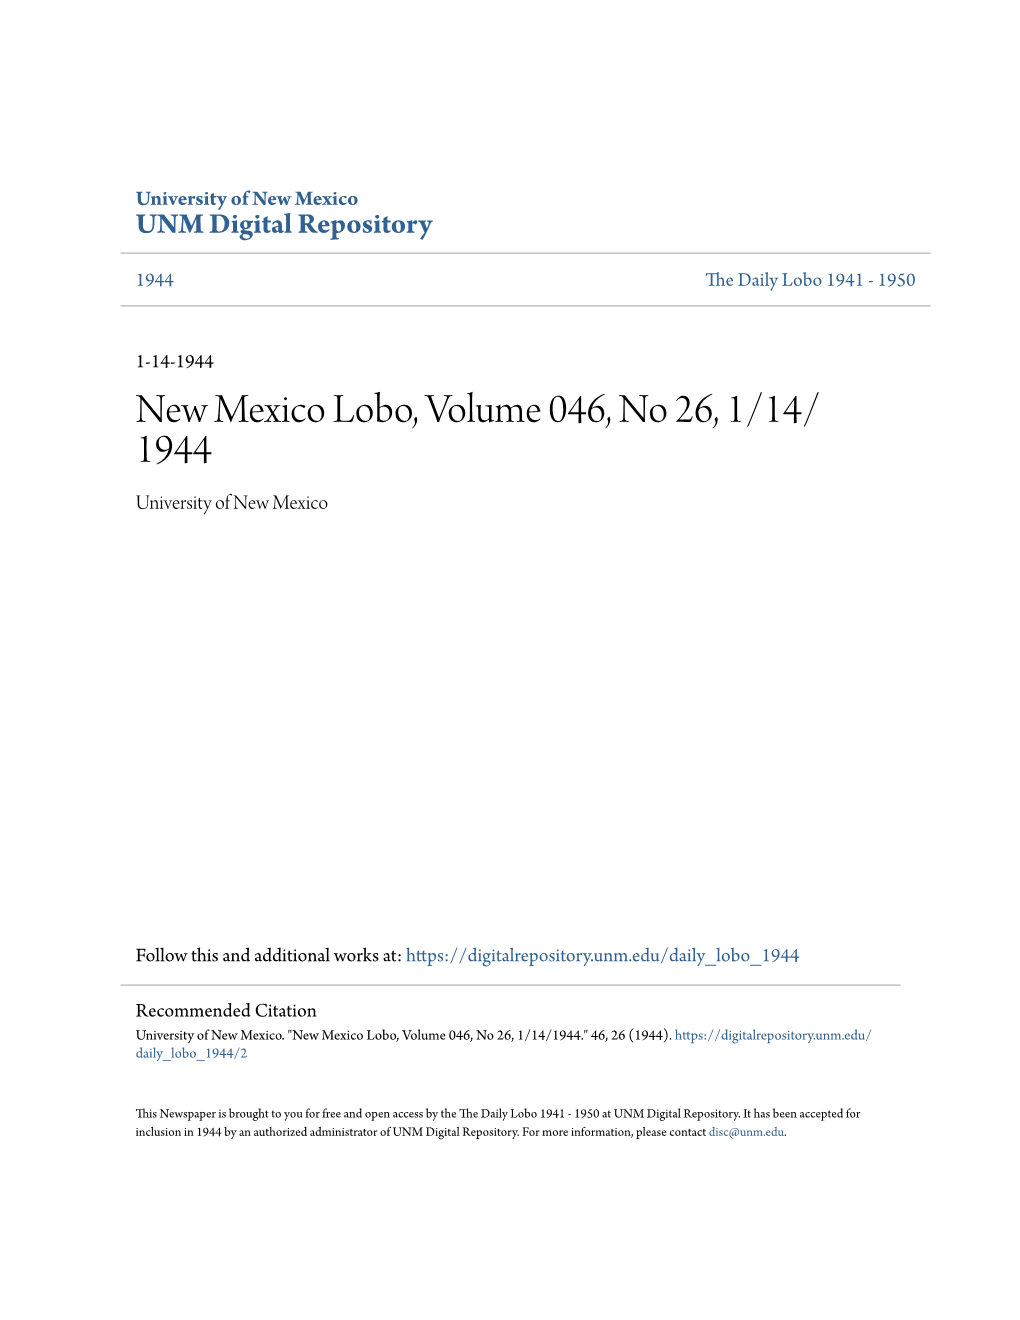 New Mexico Lobo, Volume 046, No 26, 1/14/1944." 46, 26 (1944)